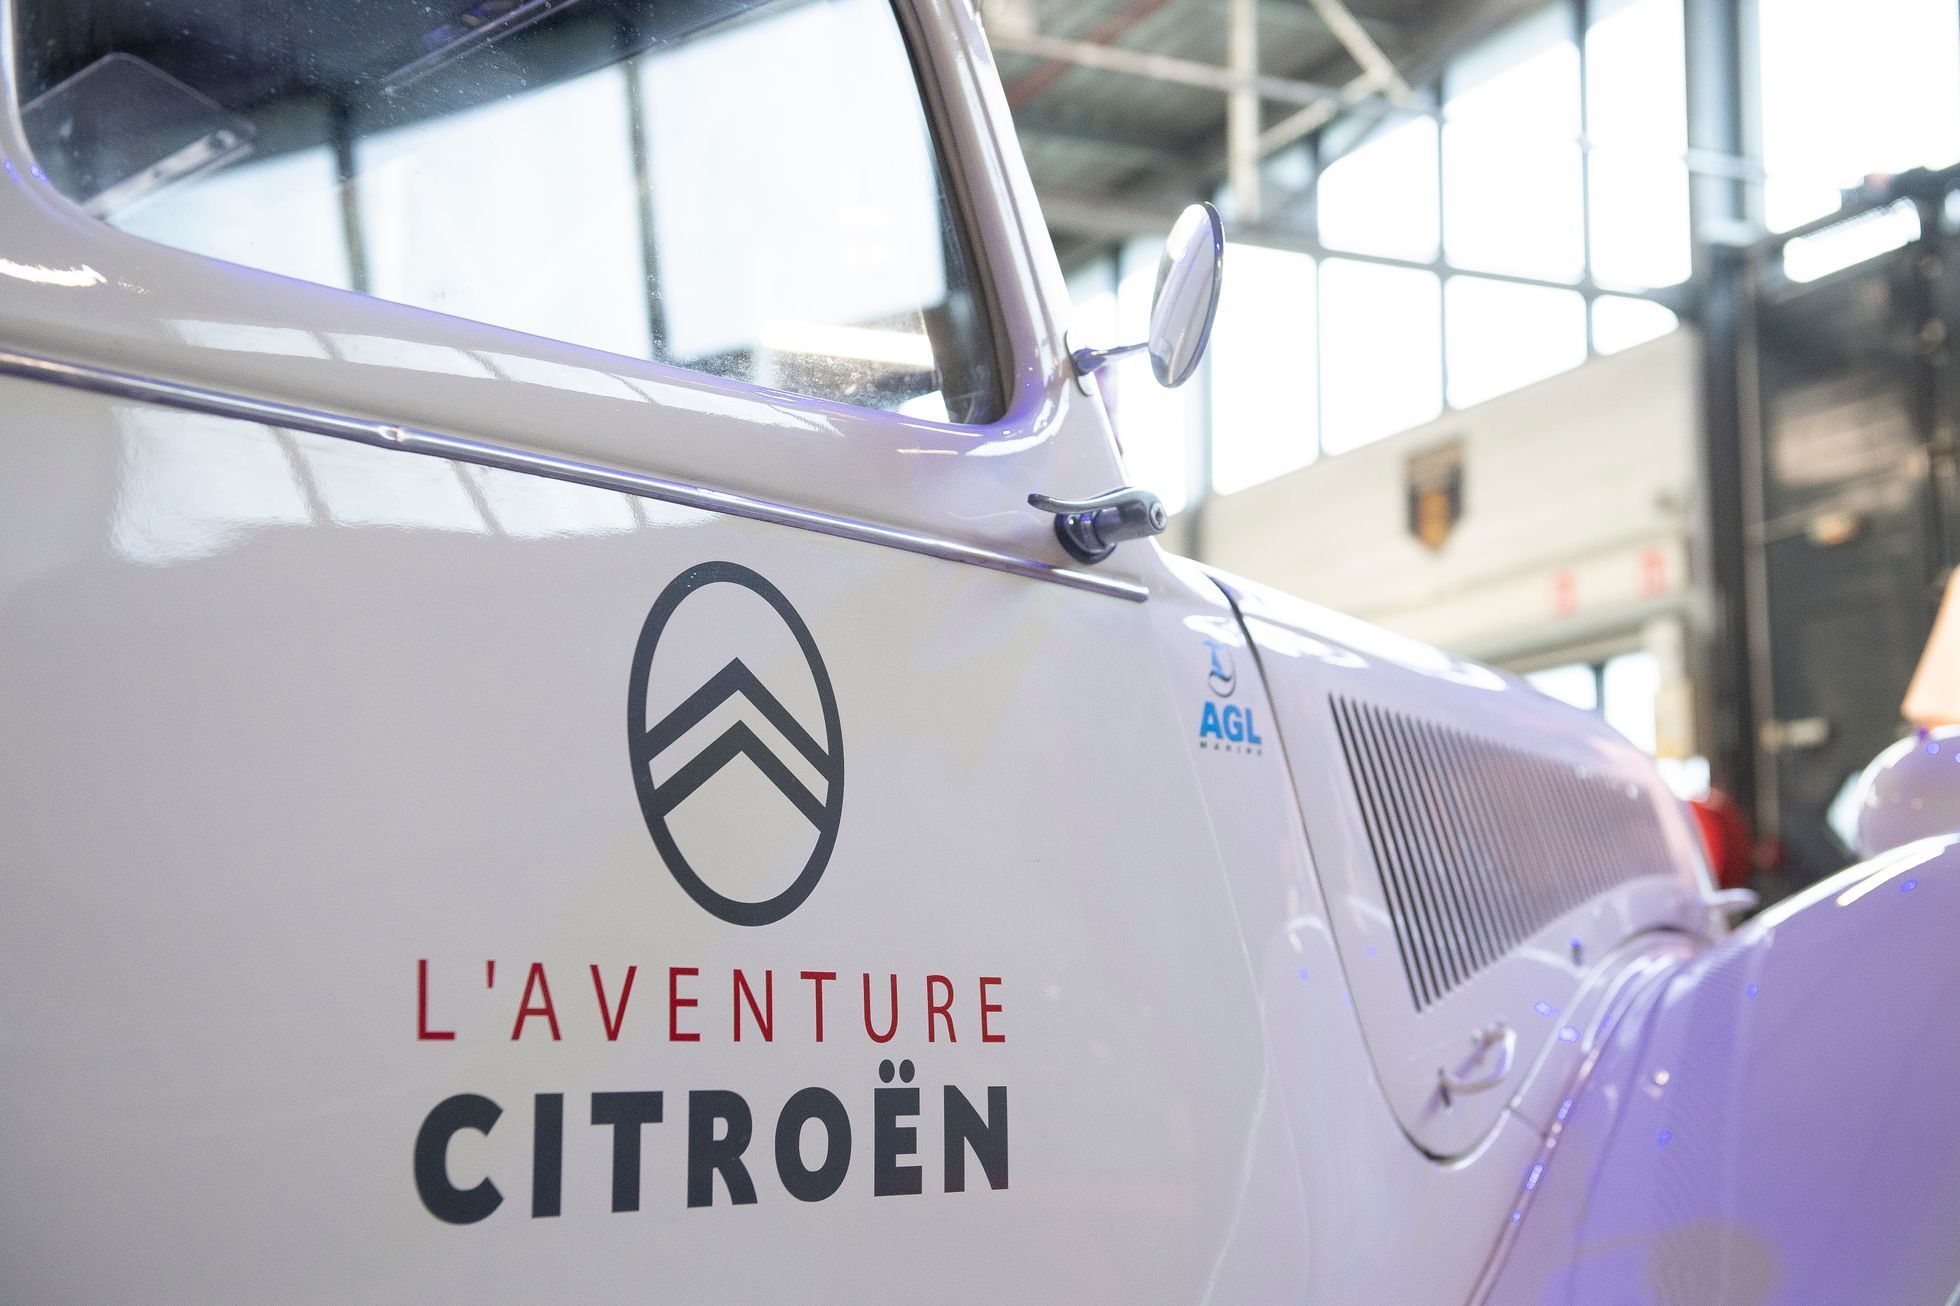 Aventure Citroën Terra America - Citroën Traction Avant